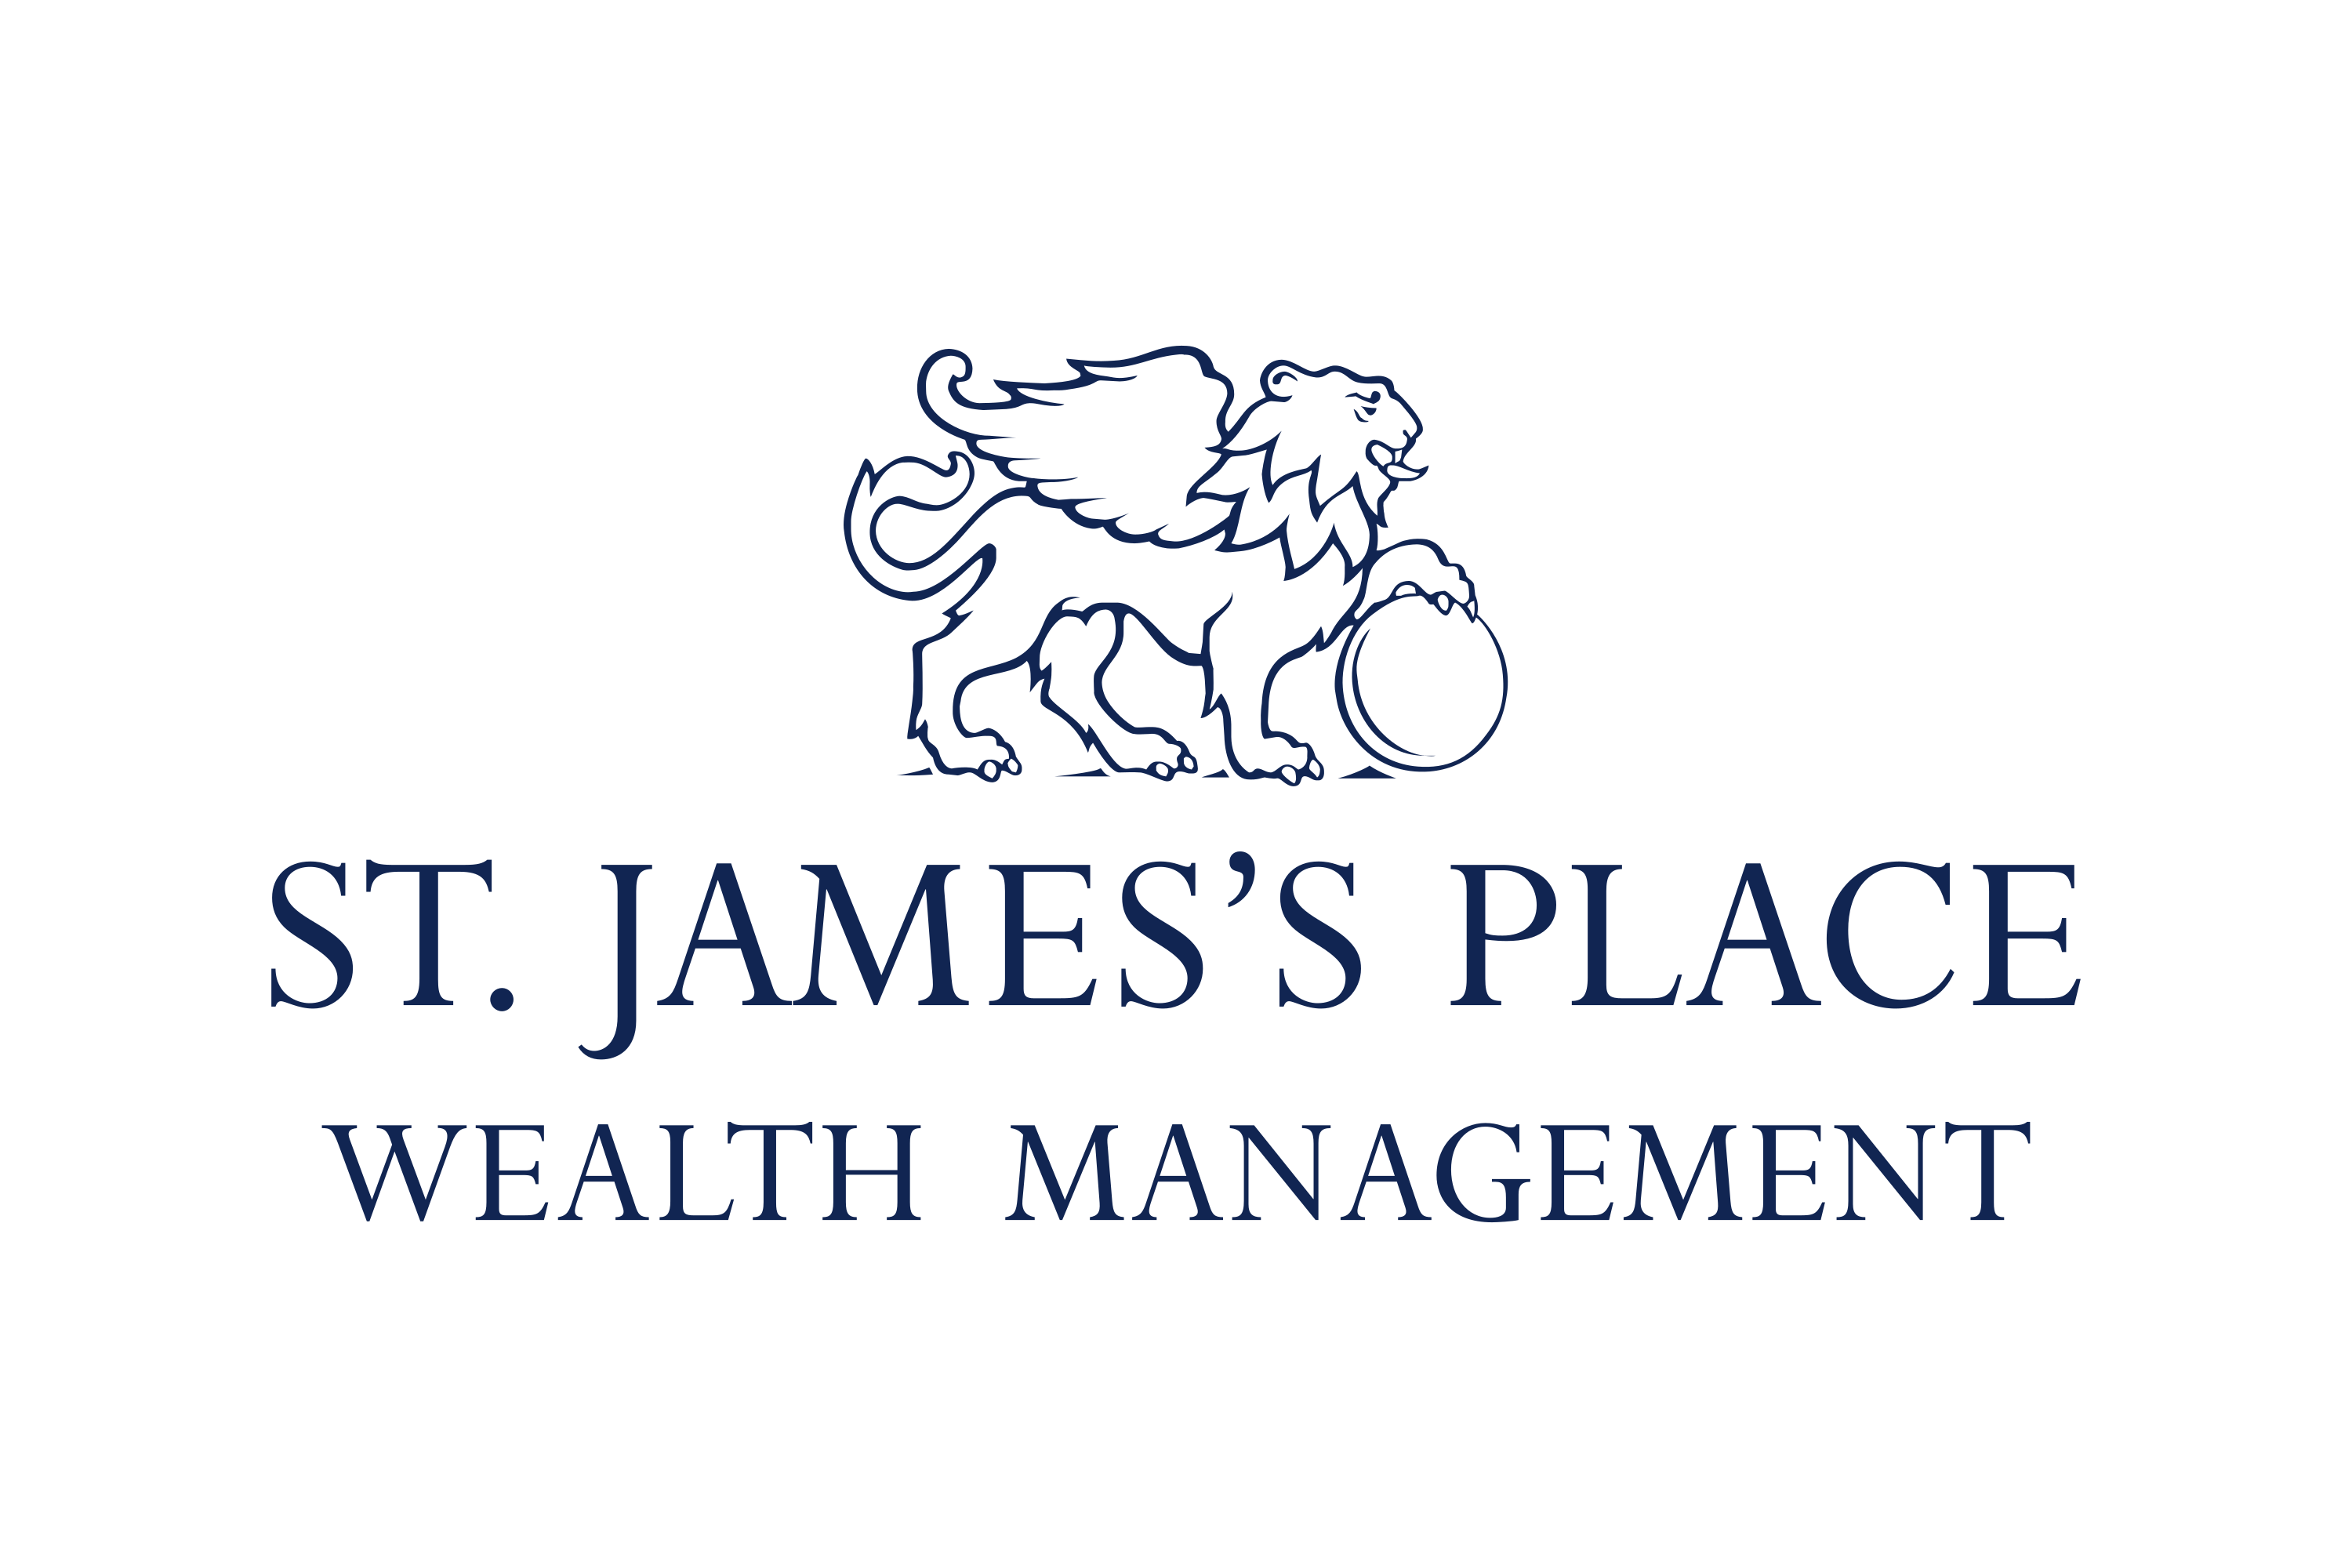 Download St. James's Place Wealth Management Group (St. James's Place